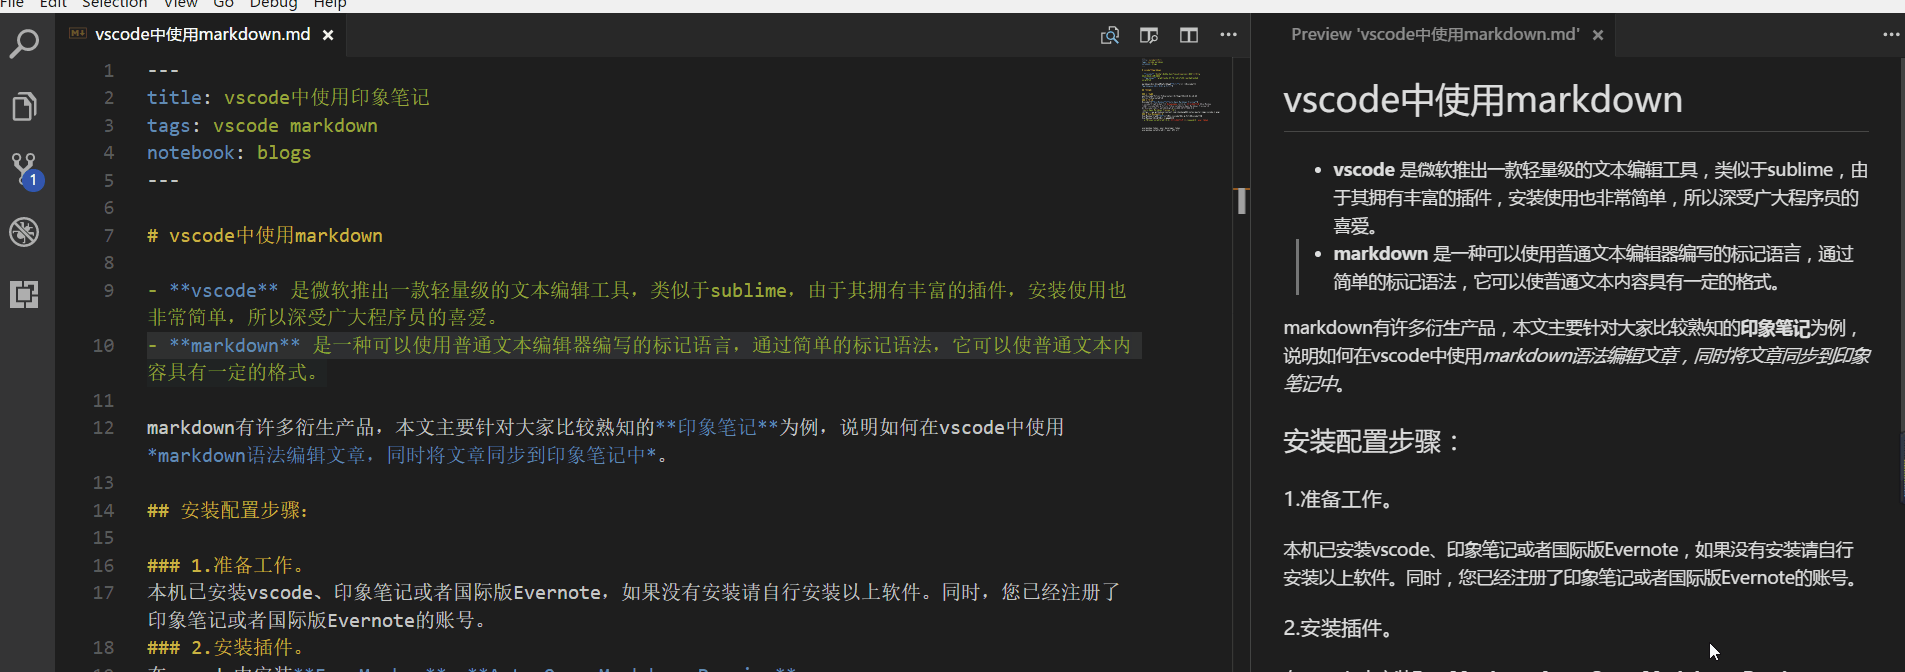 Vscode中使用markdown Qiannuehua的博客 程序员宅基地 程序员宅基地